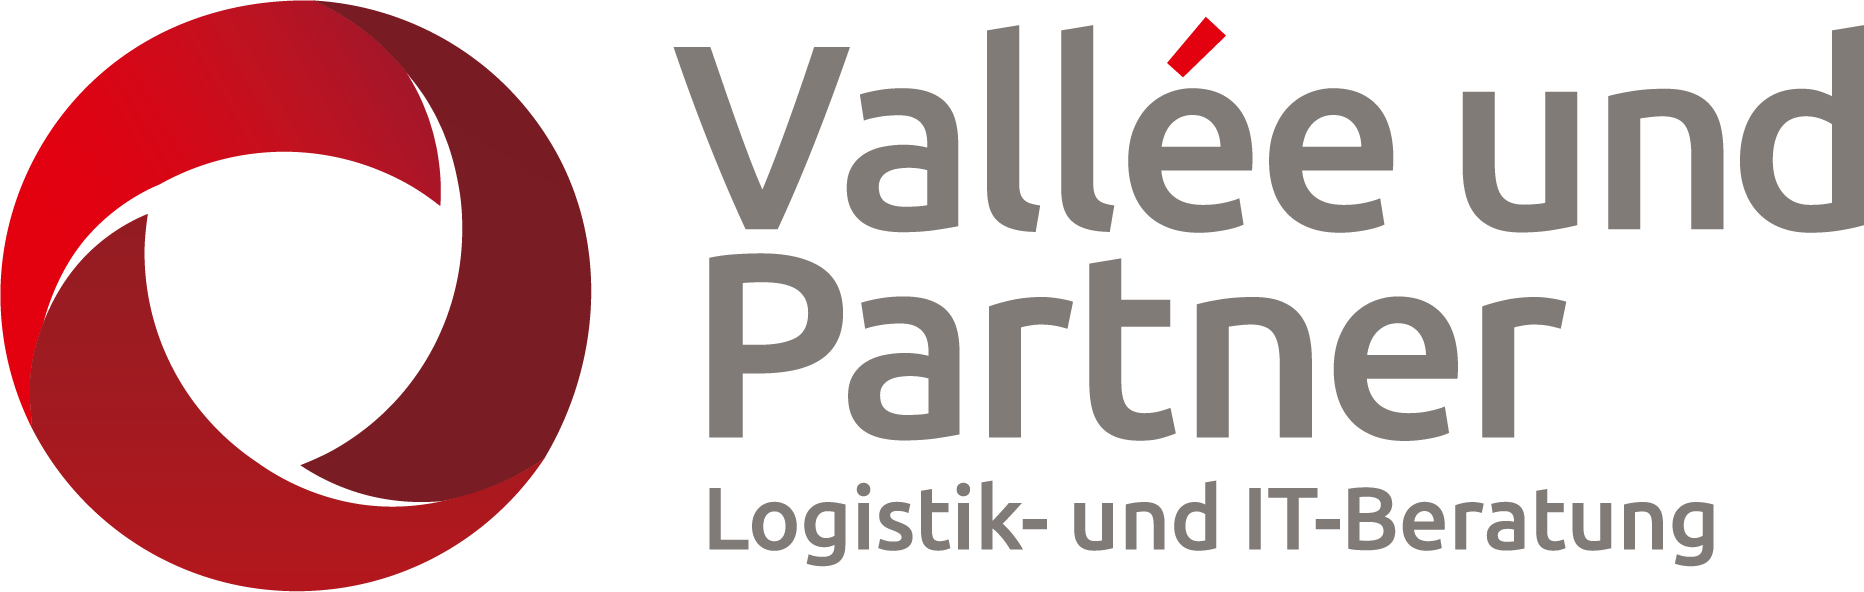 VuP GmbH - Vallée und Partner Logistik- und IT-Beratung